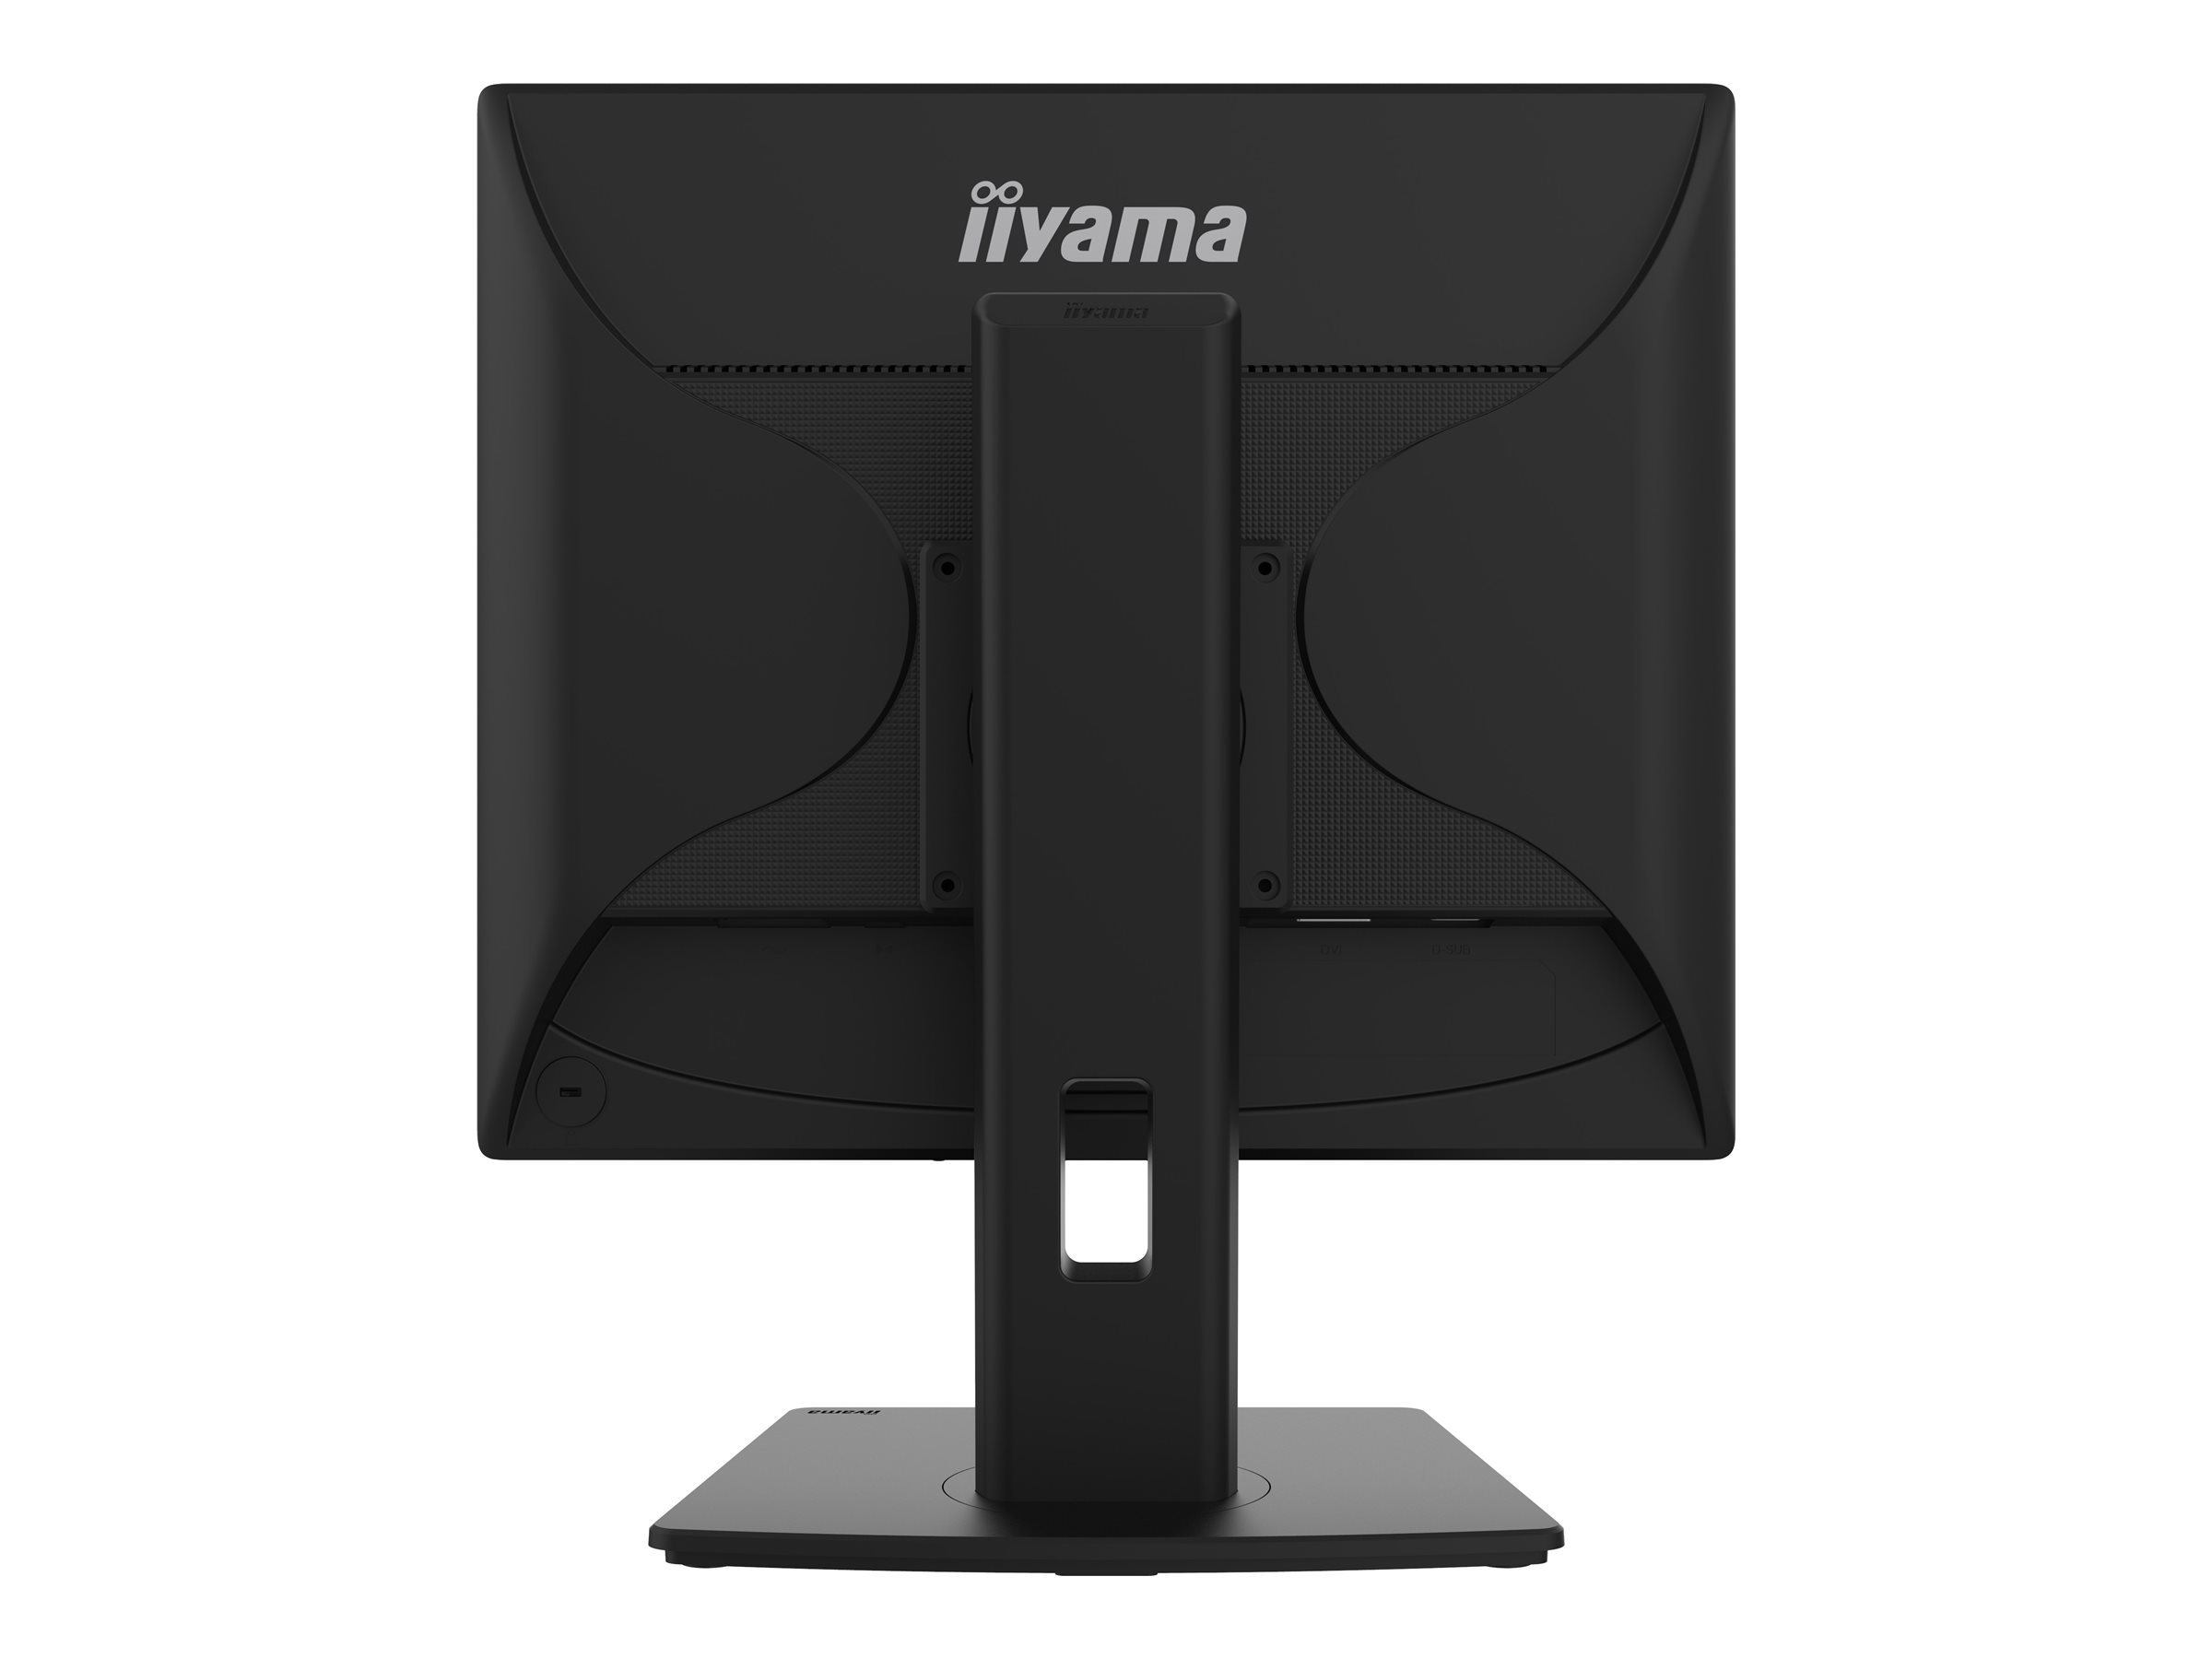 iiyama ProLite B1980D-B5 - Écran LED - 19" - 1280 x 1024 @ 60 Hz - TN - 250 cd/m² - 1000:1 - 5 ms - DVI, VGA - noir mat - B1980D-B5 - Écrans d'ordinateur